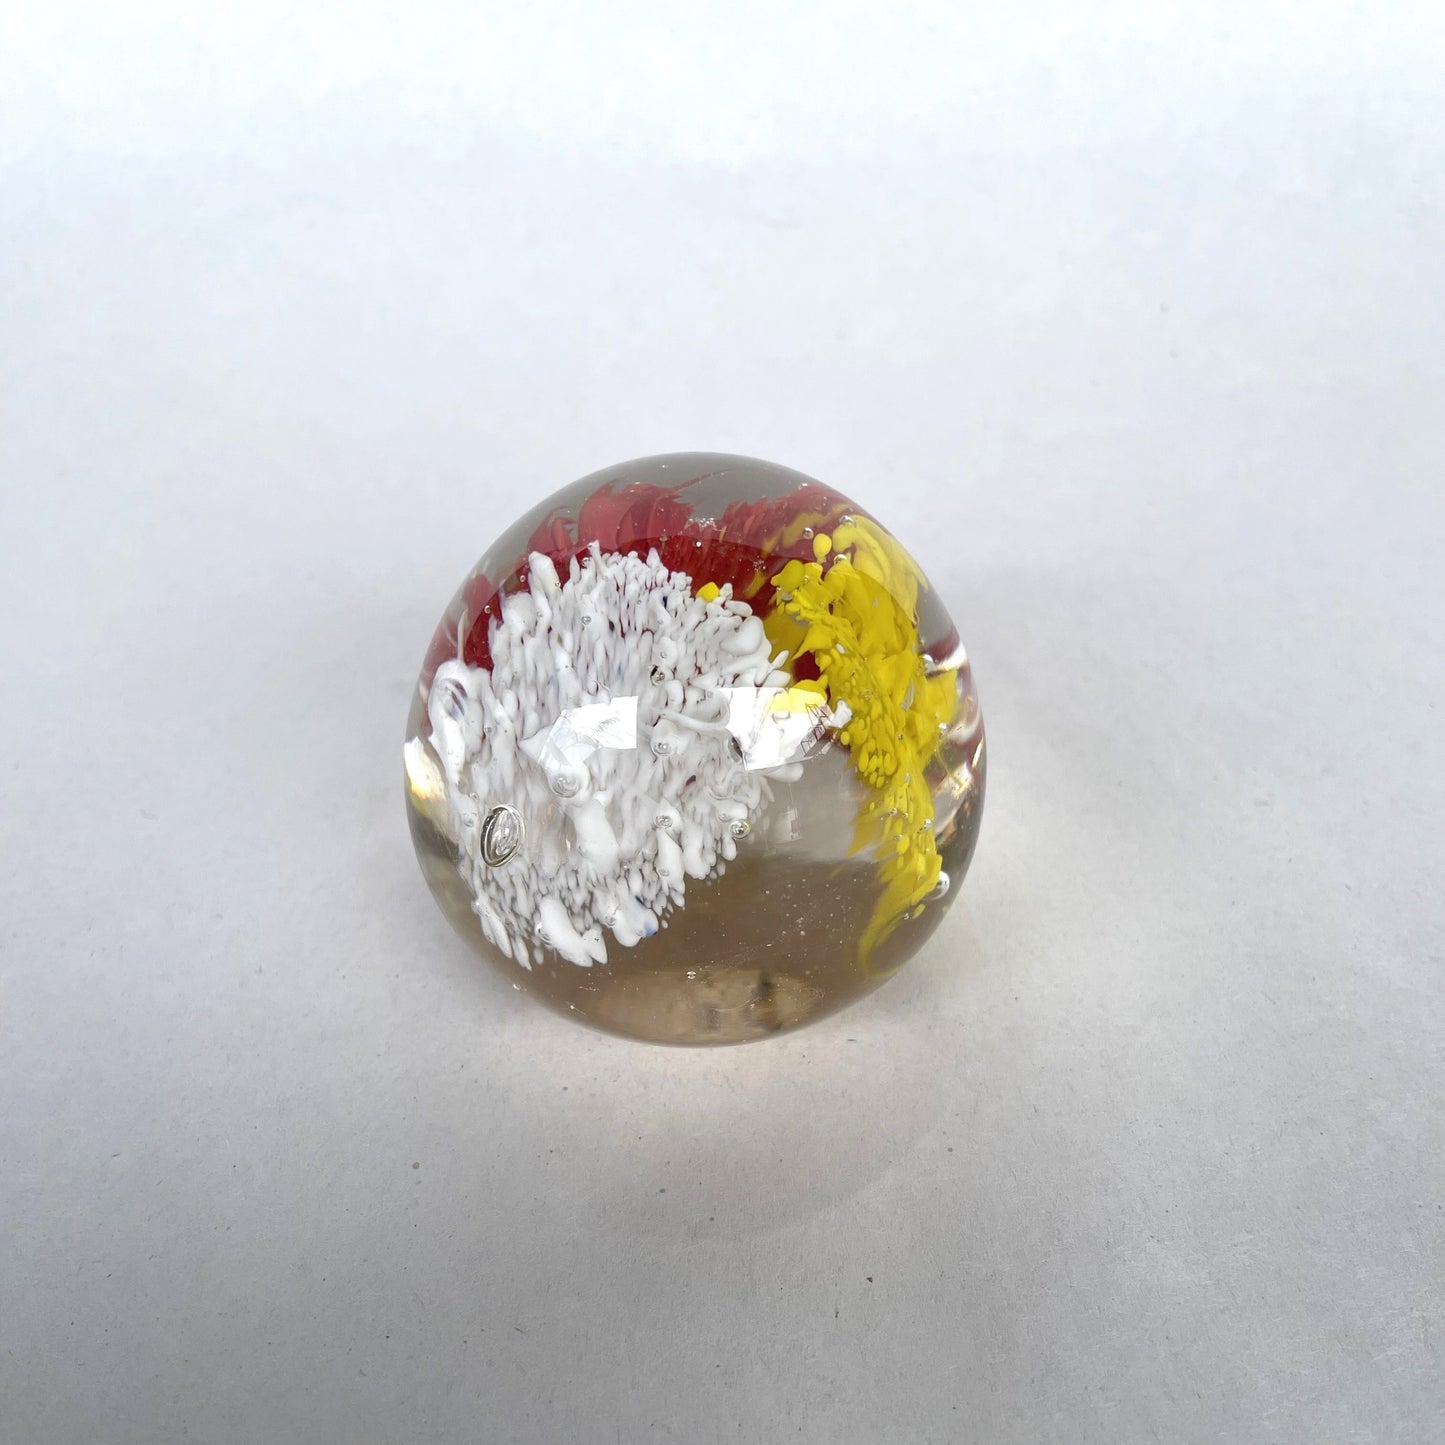 Red, White, Yellow Art Glass Paperweight - 5cm